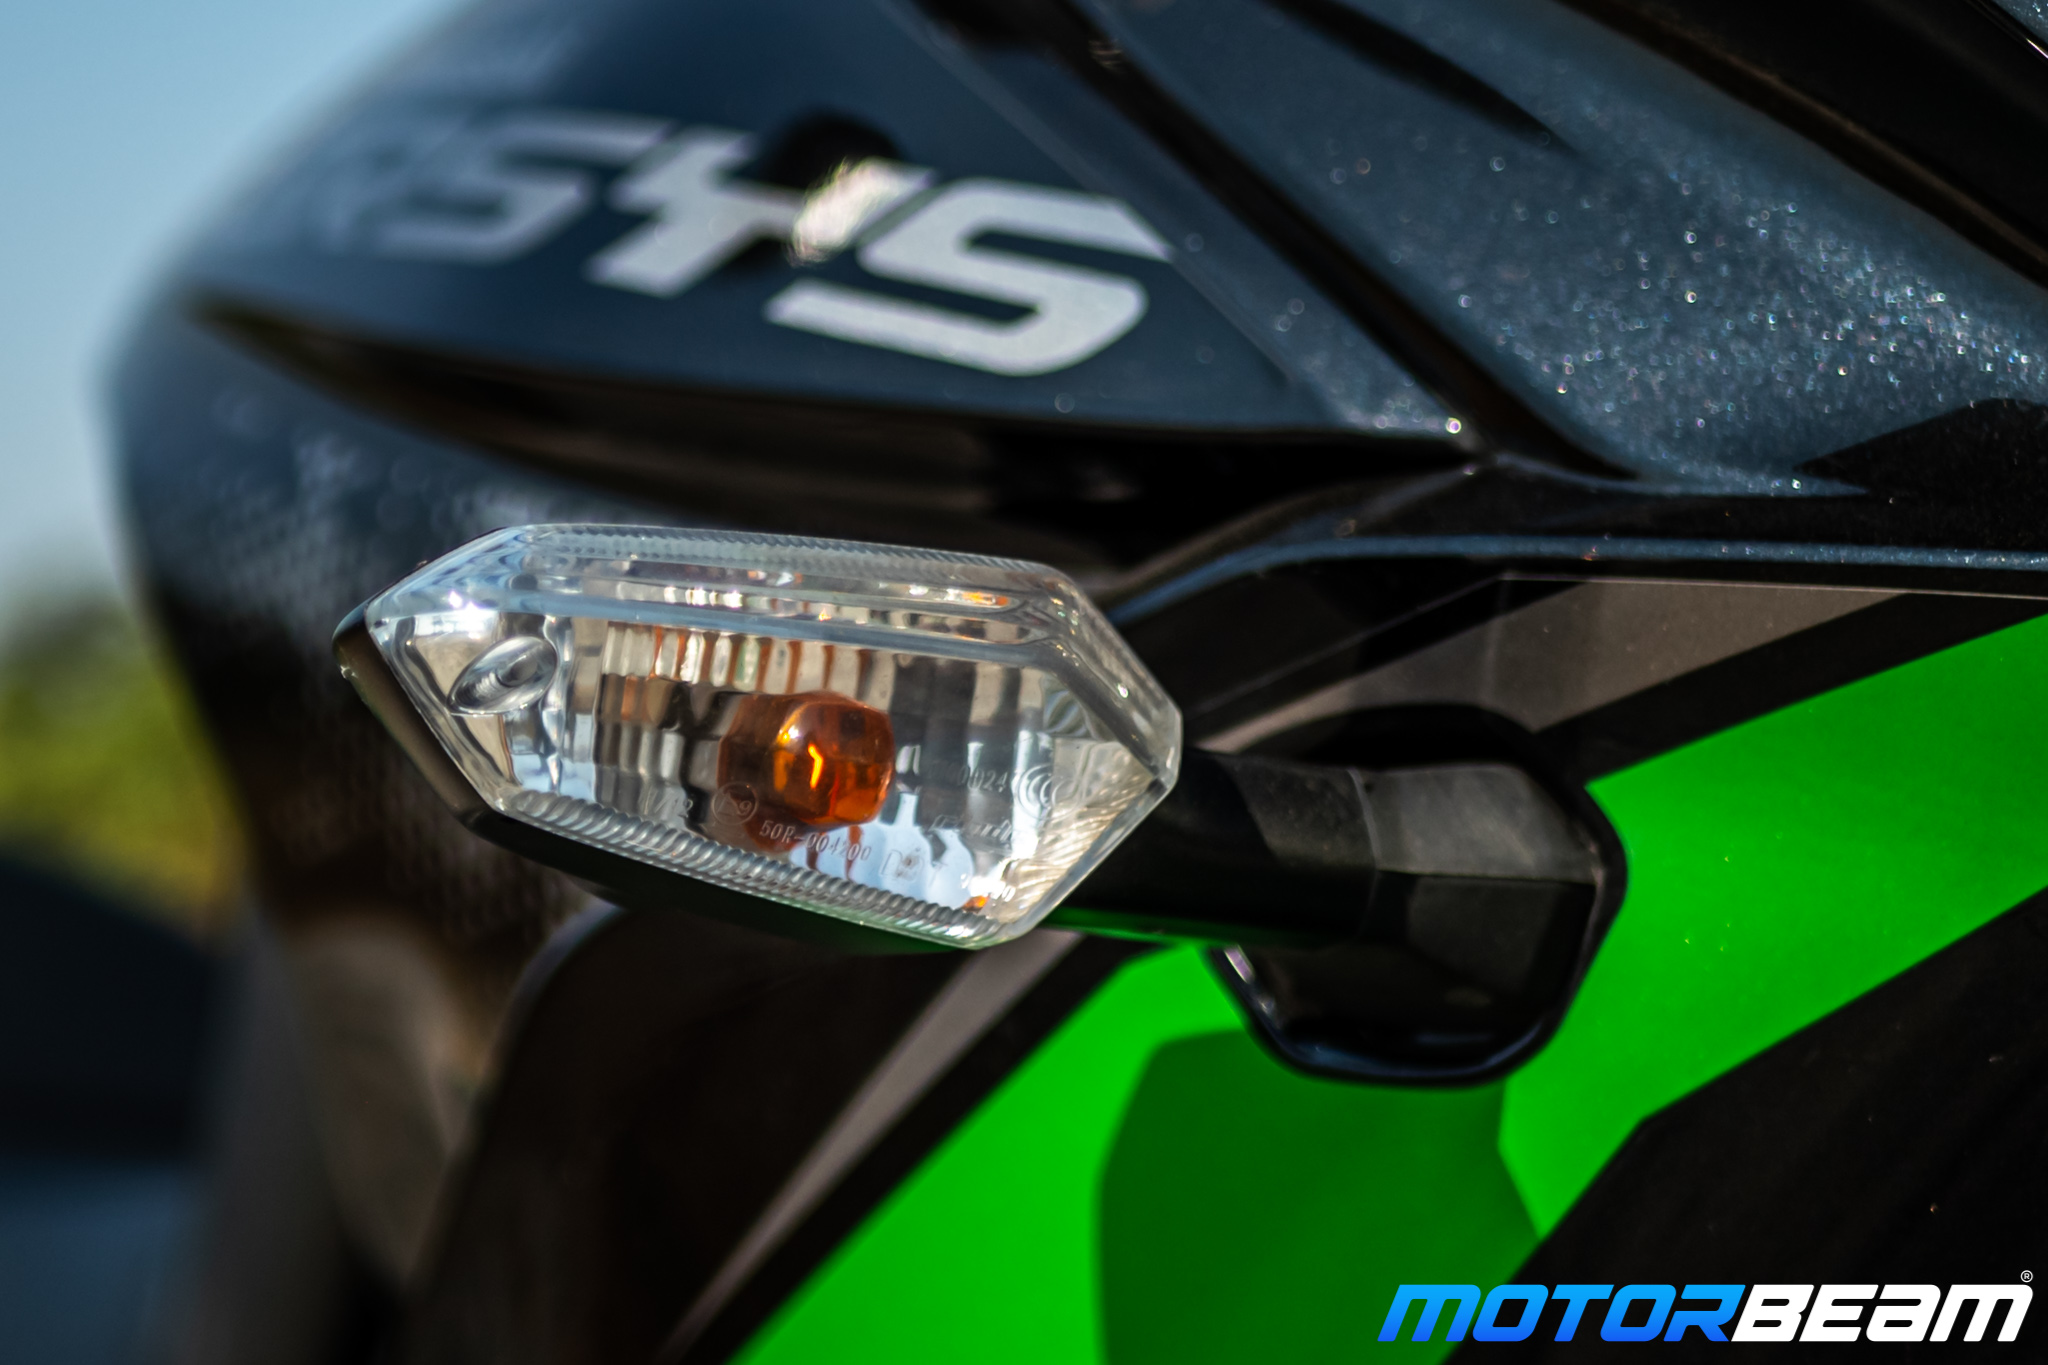 2021 Kawasaki Versys 650 Review 31